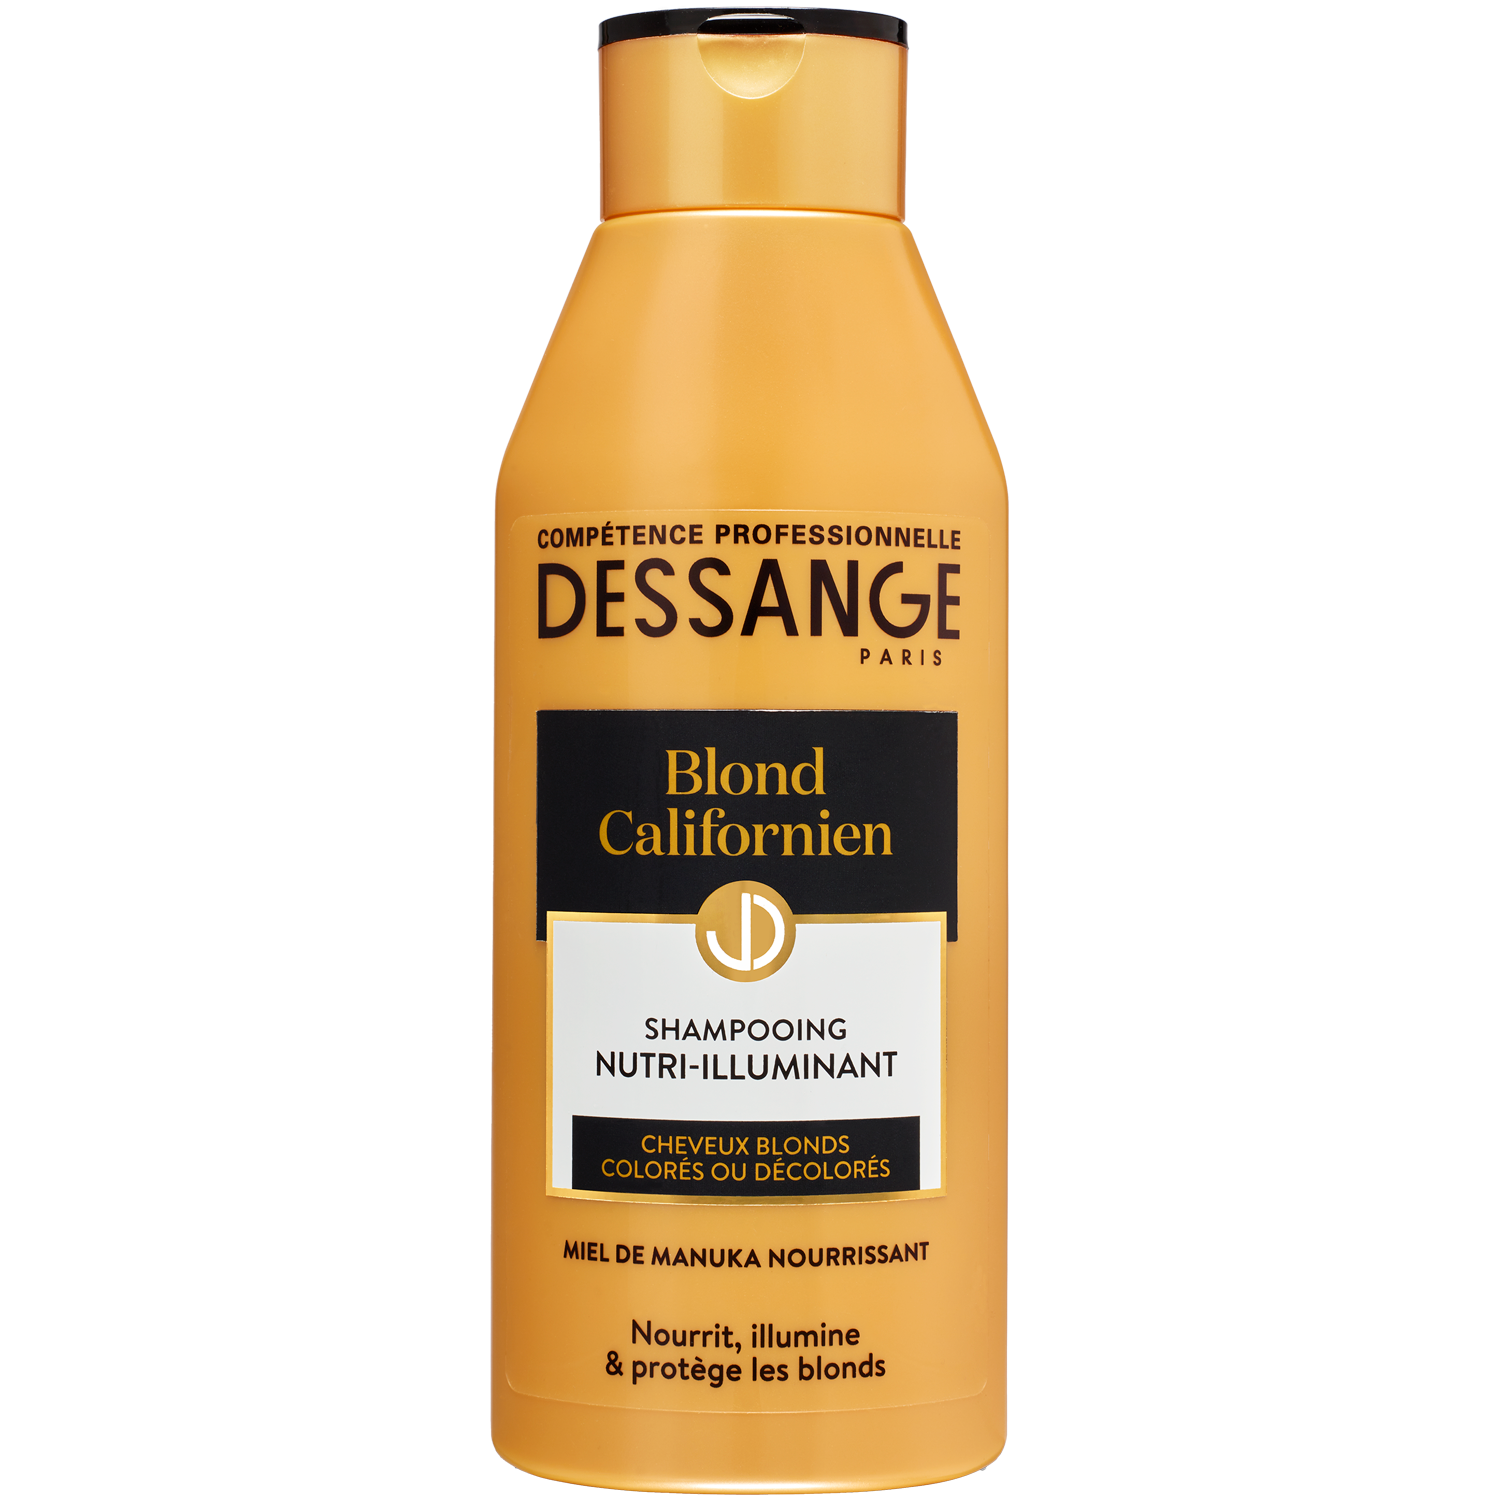 цена Dessange Professional Hair Luxury Blond Californien шампунь для светлых волос, 250 мл